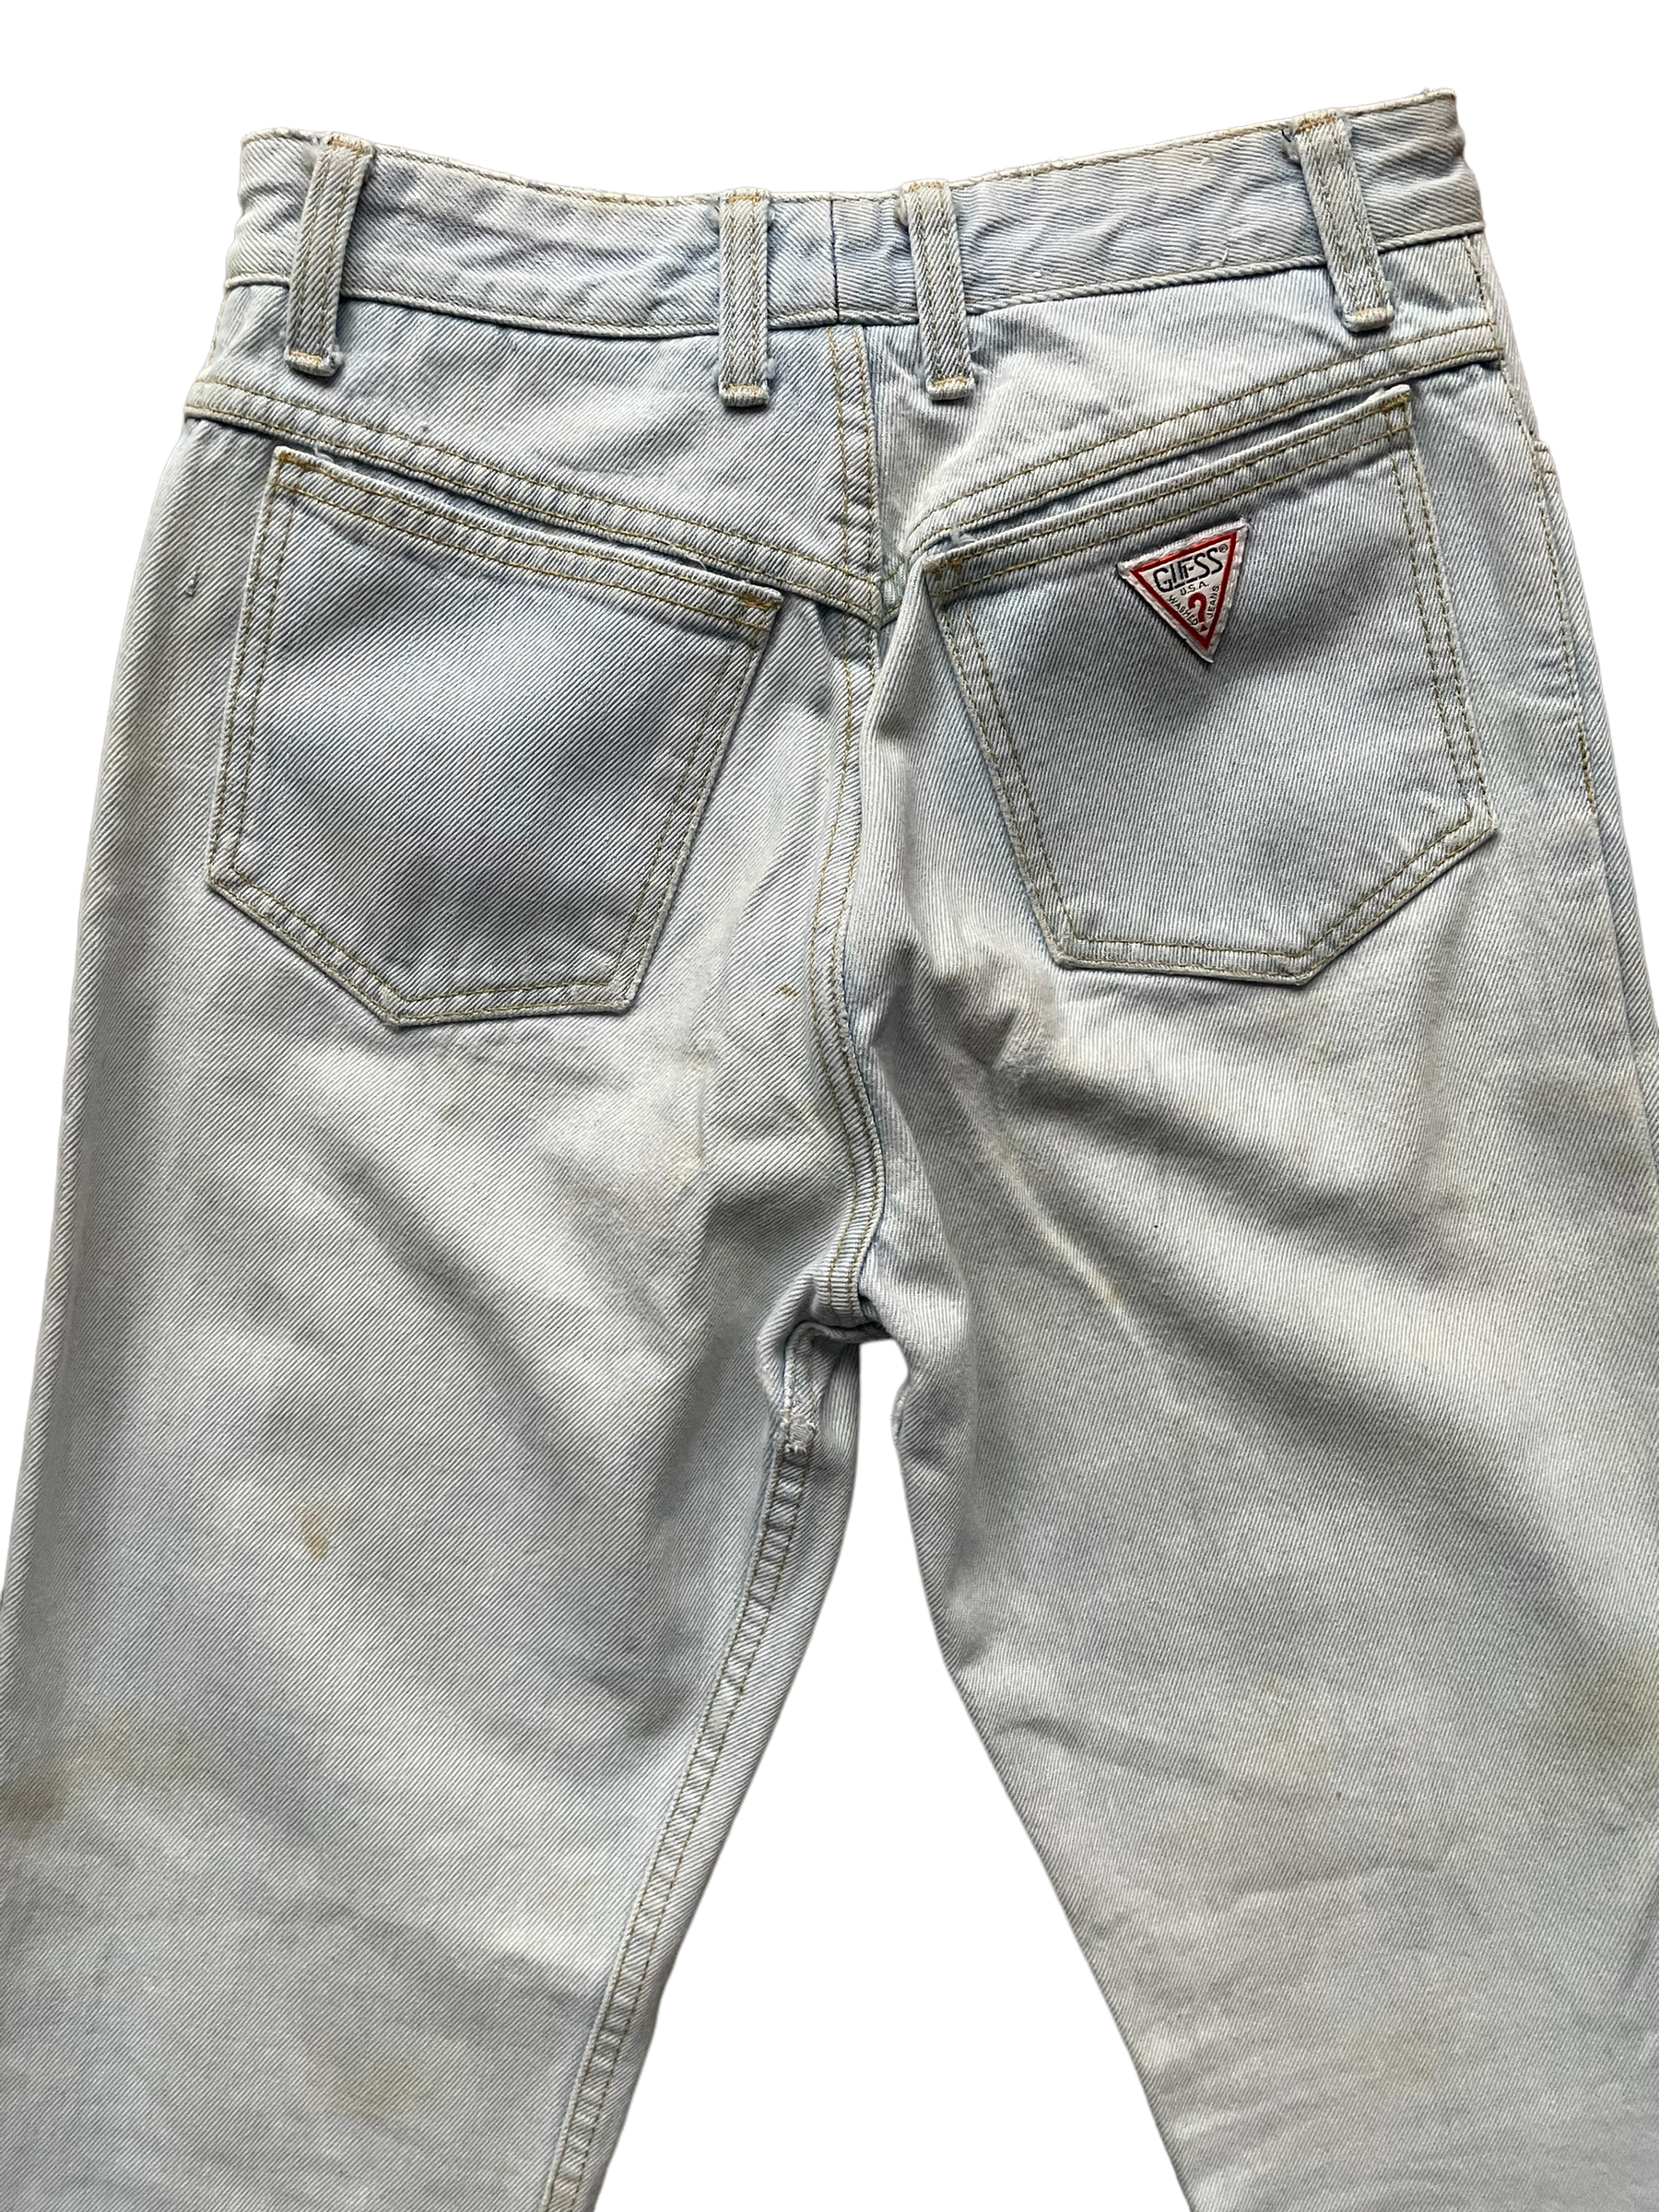 Back pocket view of Vintage 1980s Ladies Guess Jeans | Barn Owl Seattle | Vintage Ladies Jeans and Pants